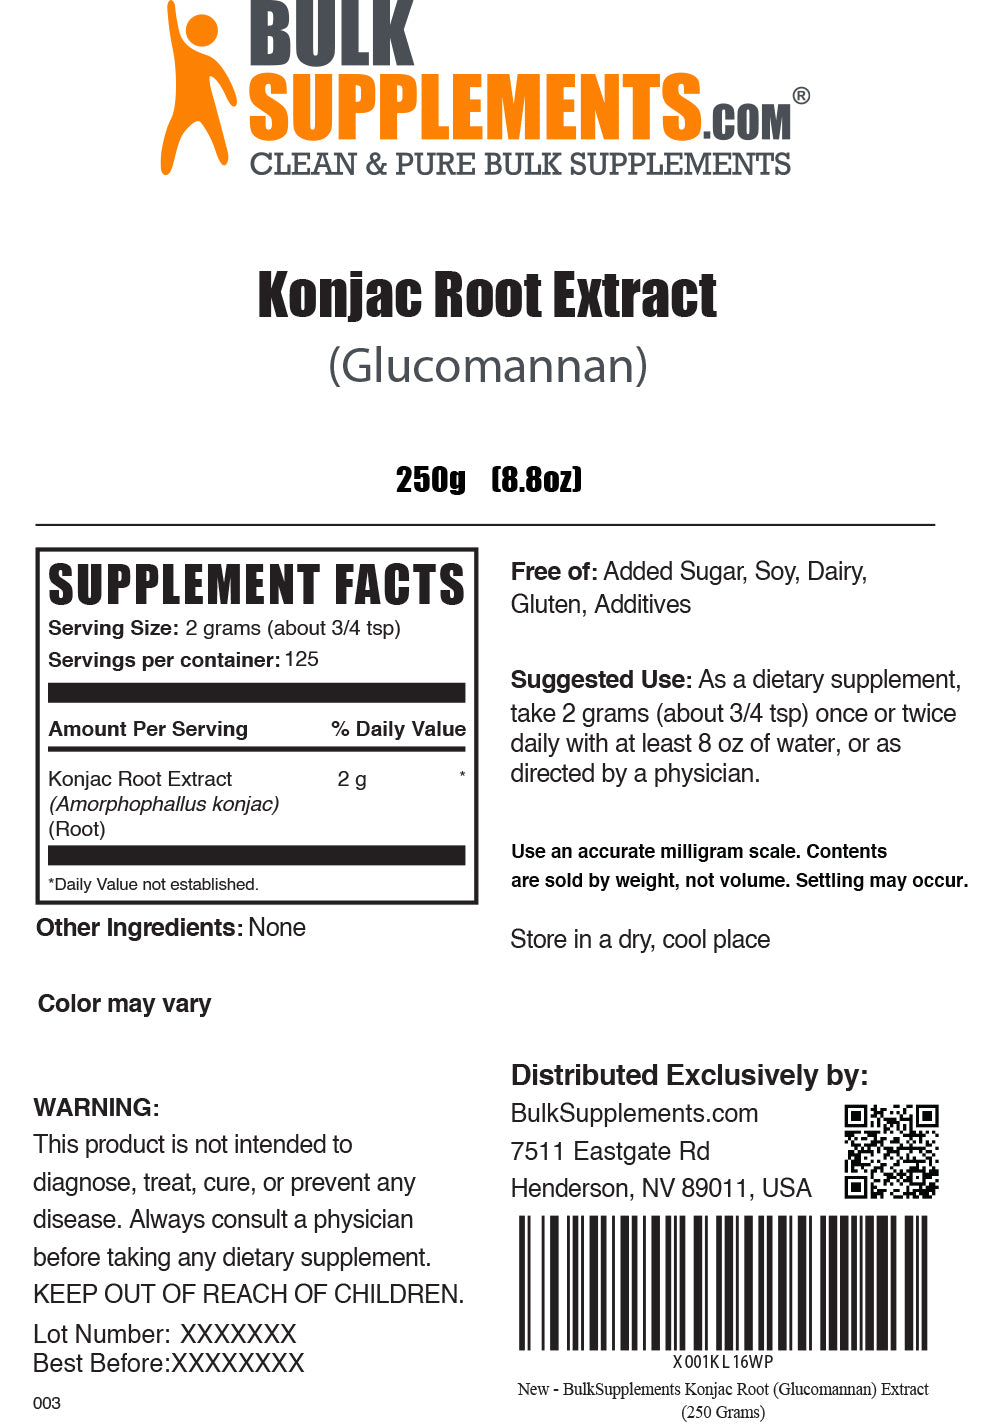 Konjac Root Extract powder label 250g